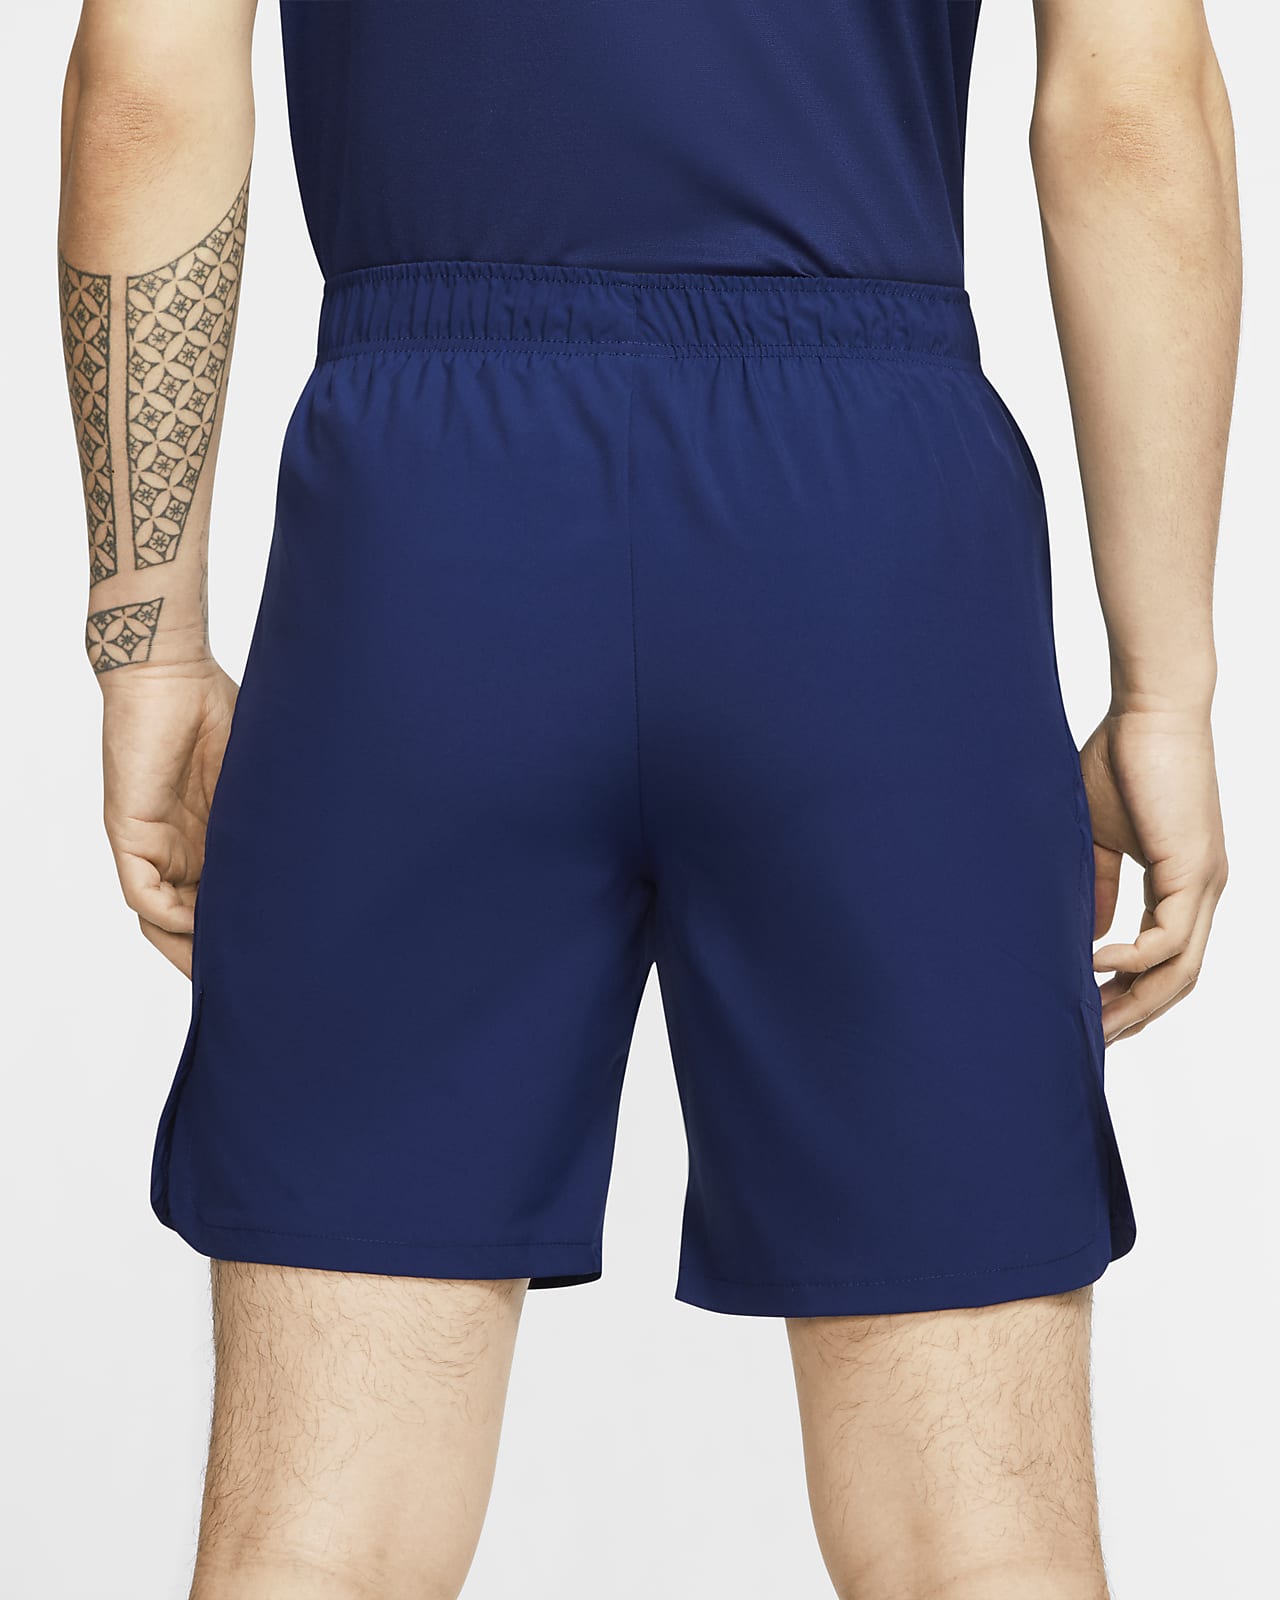 men's nike dri flex woven training shorts